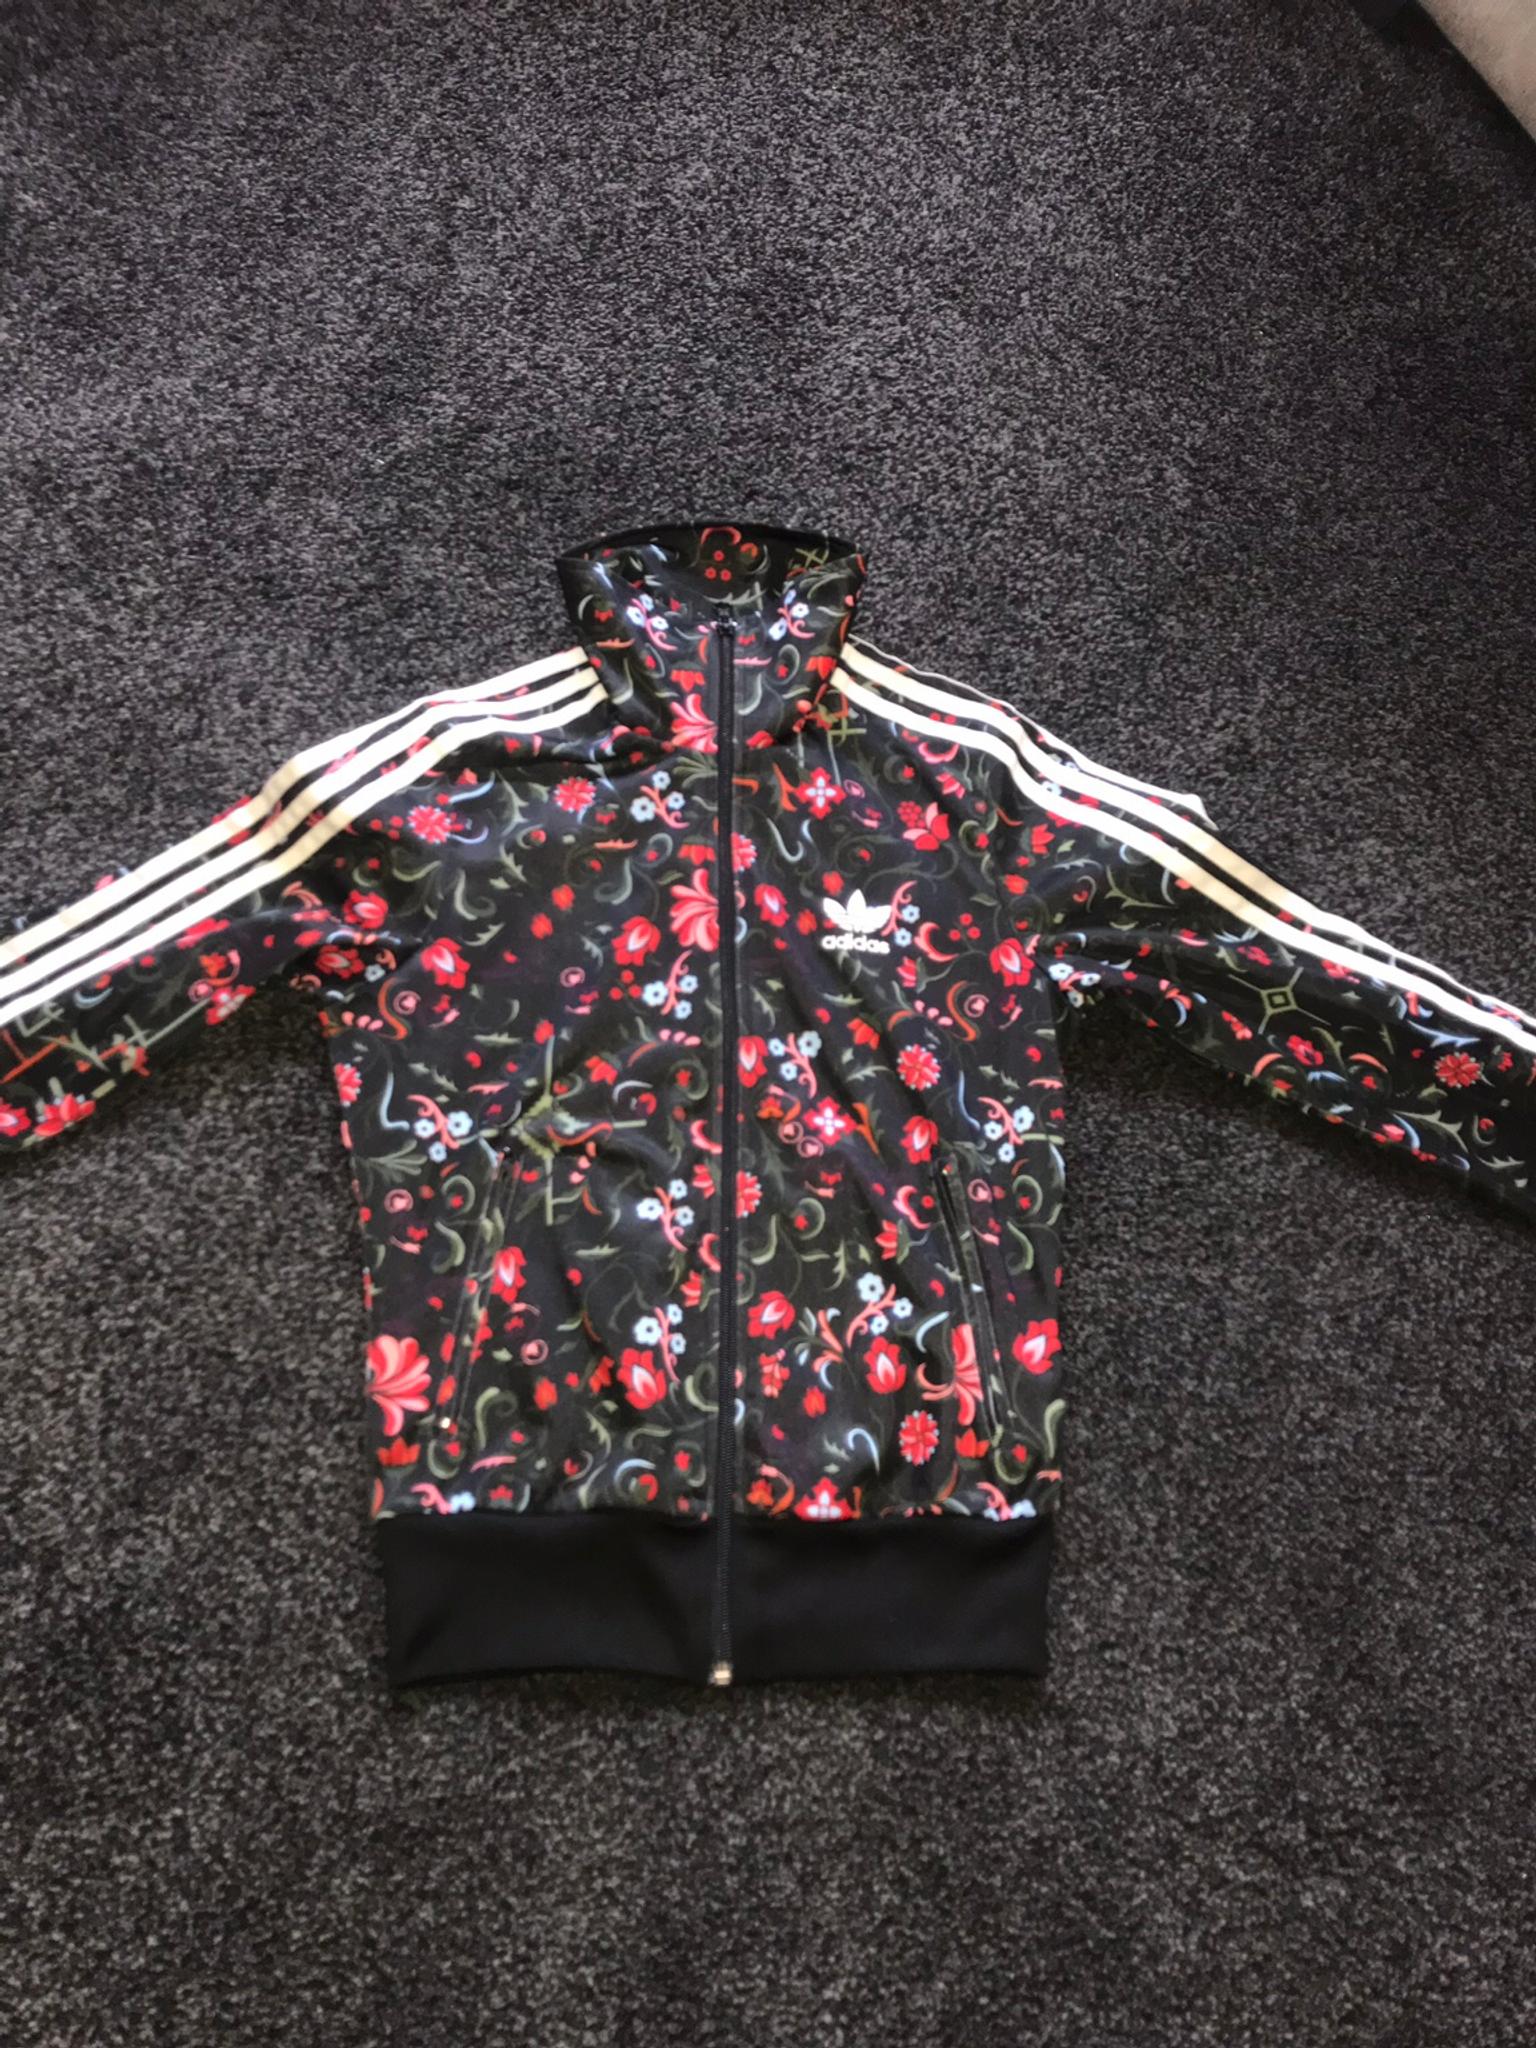 adidas black floral jacket